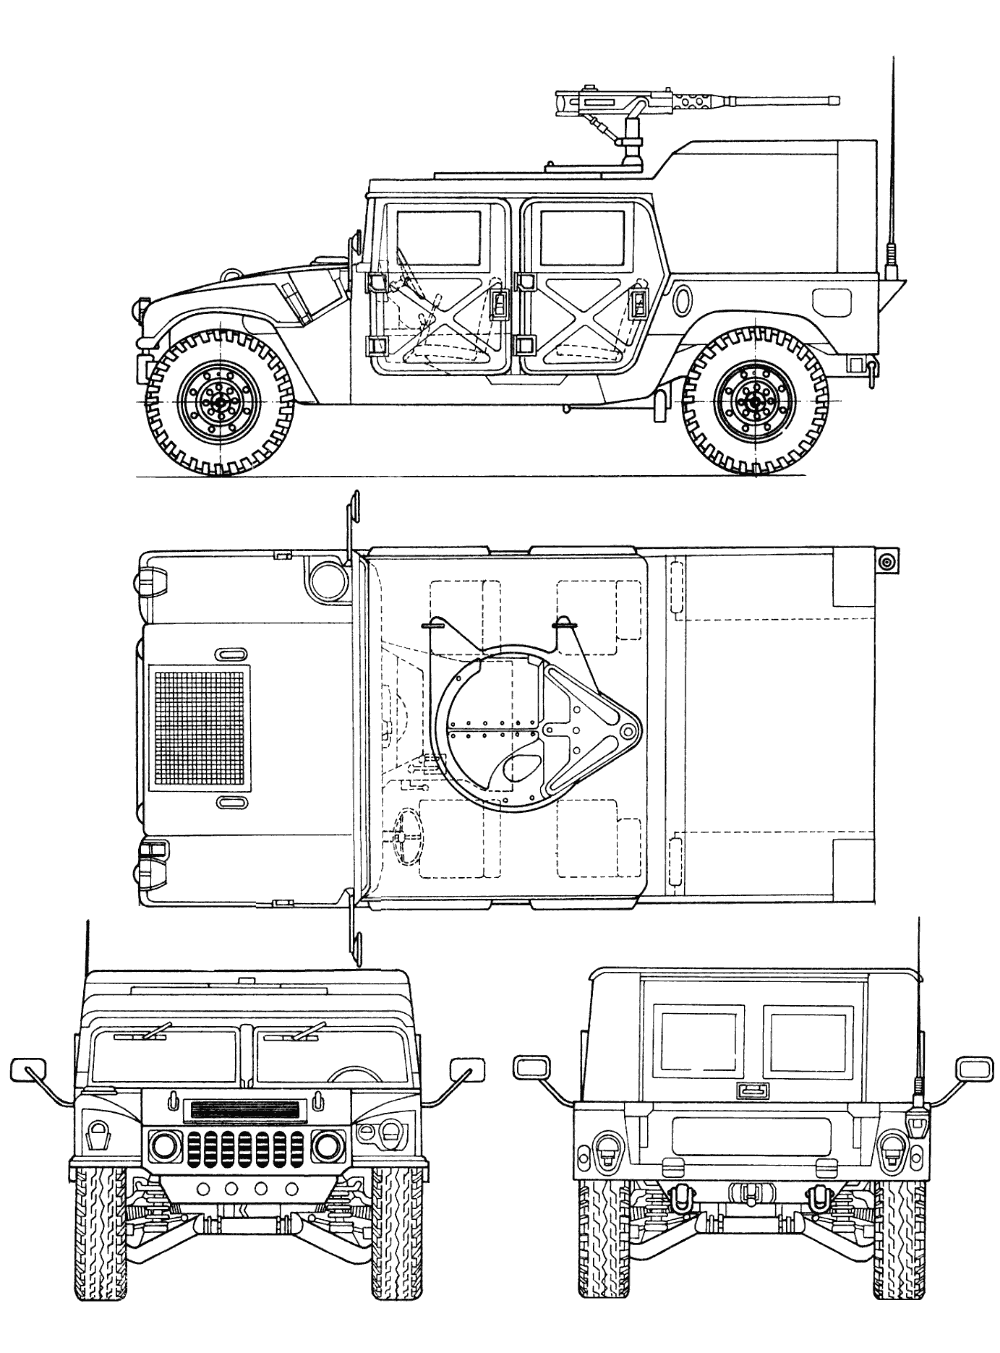 Humvee blueprint